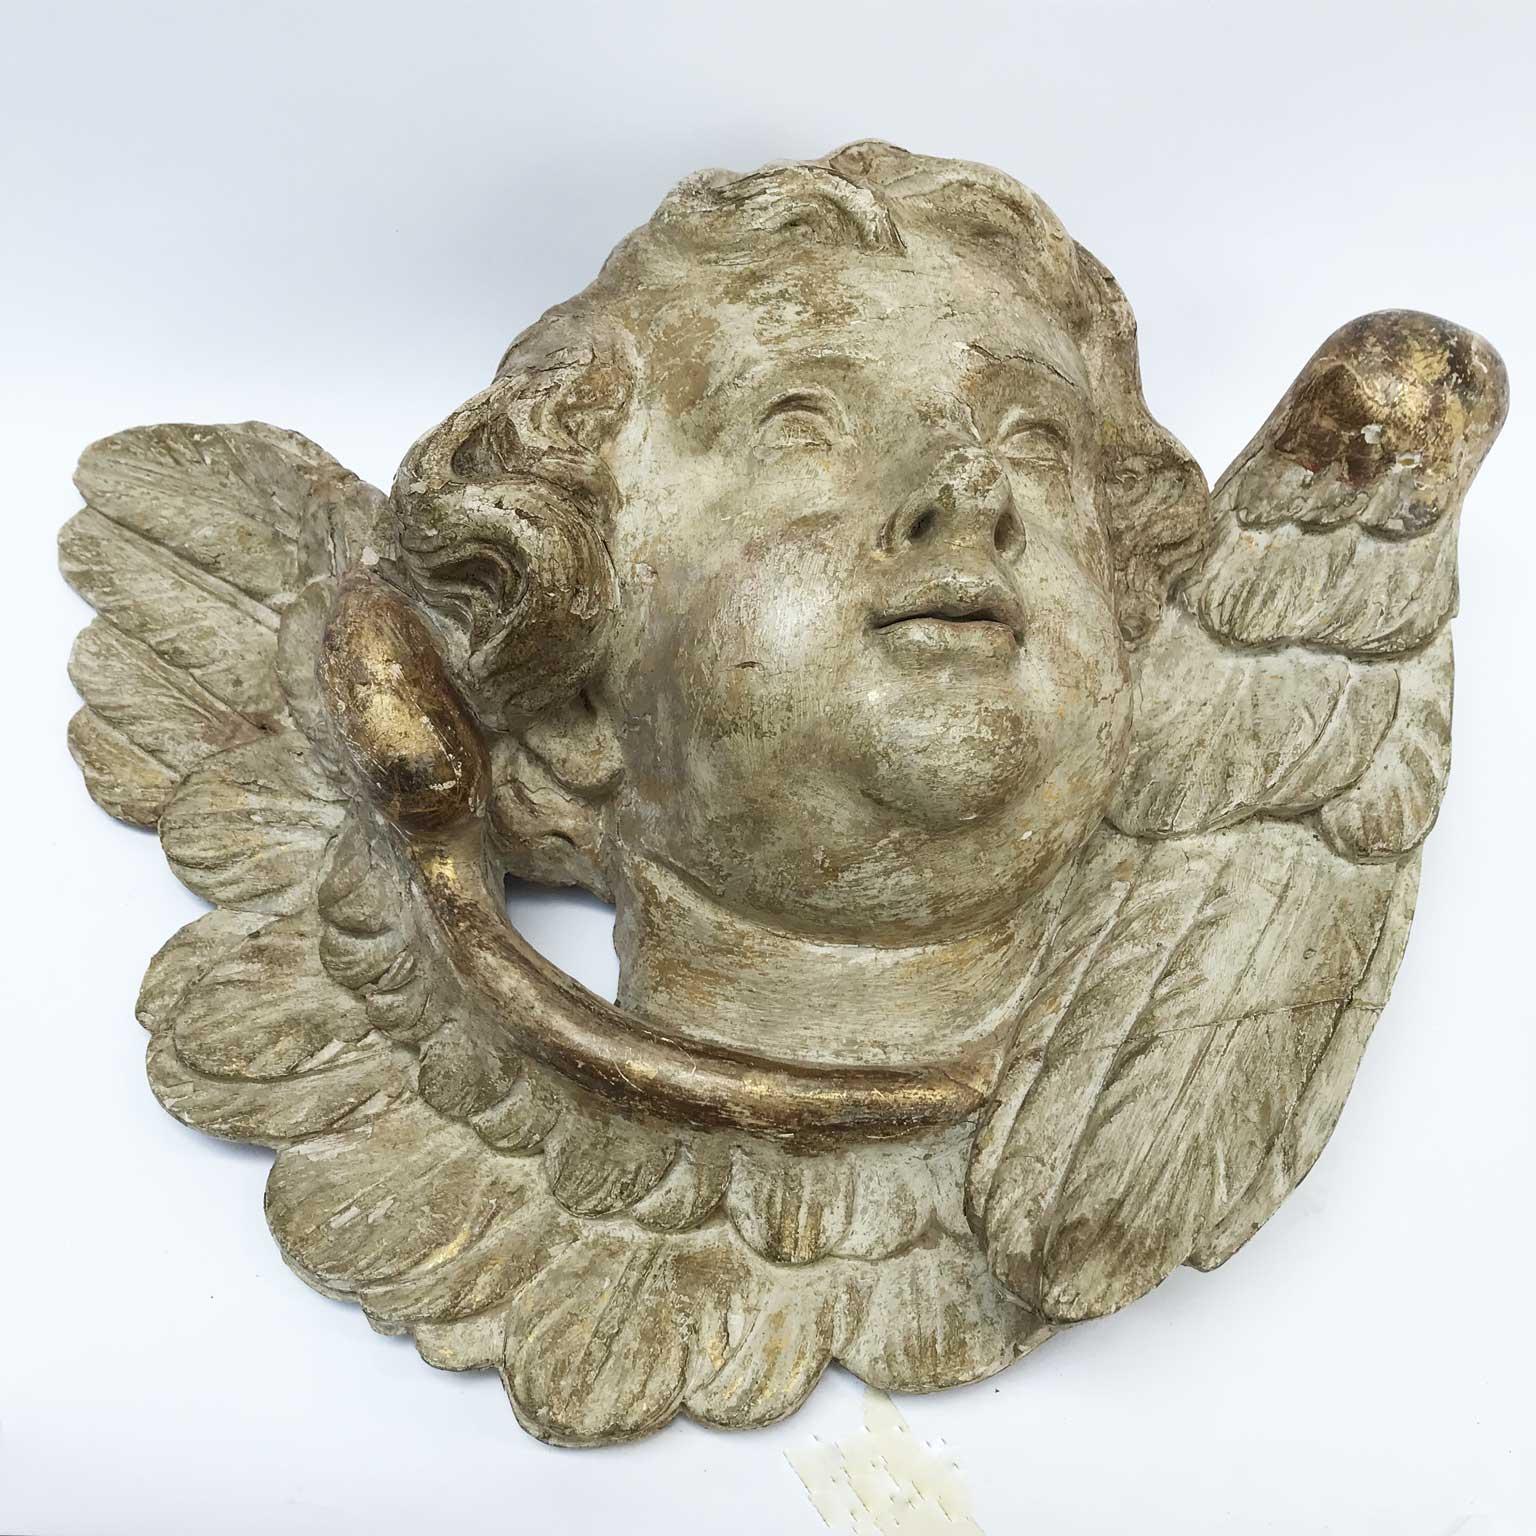 Baroque Pair of Italian Cherub Head Sculptures 18th Century Carved Winged Putti Heads